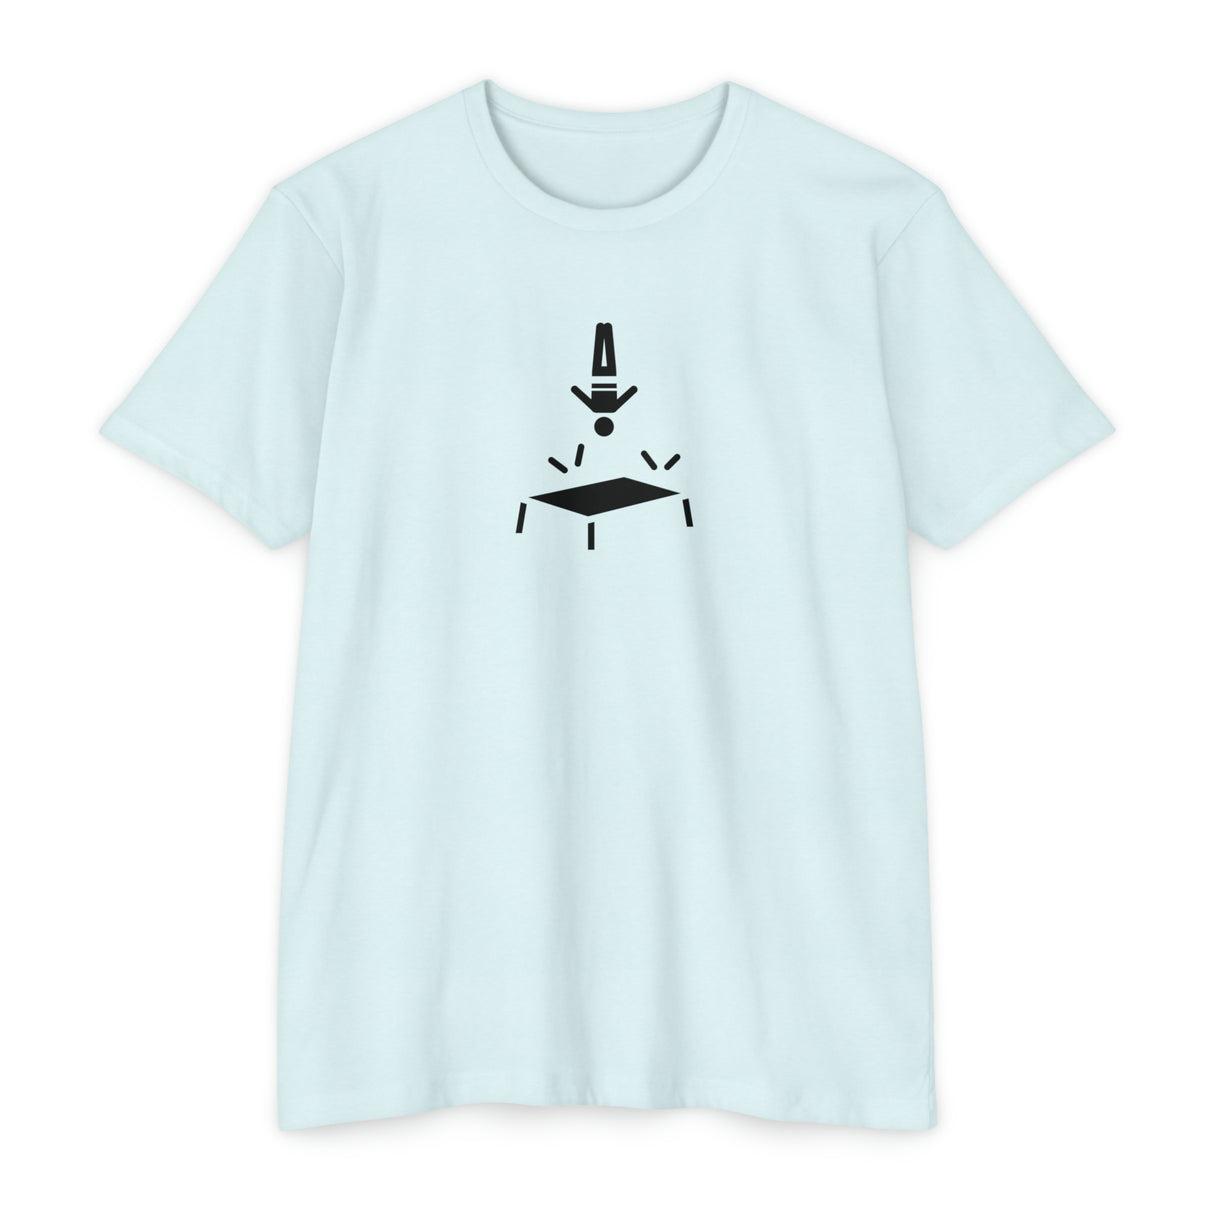 "Flip" Trampoline T-Shirt